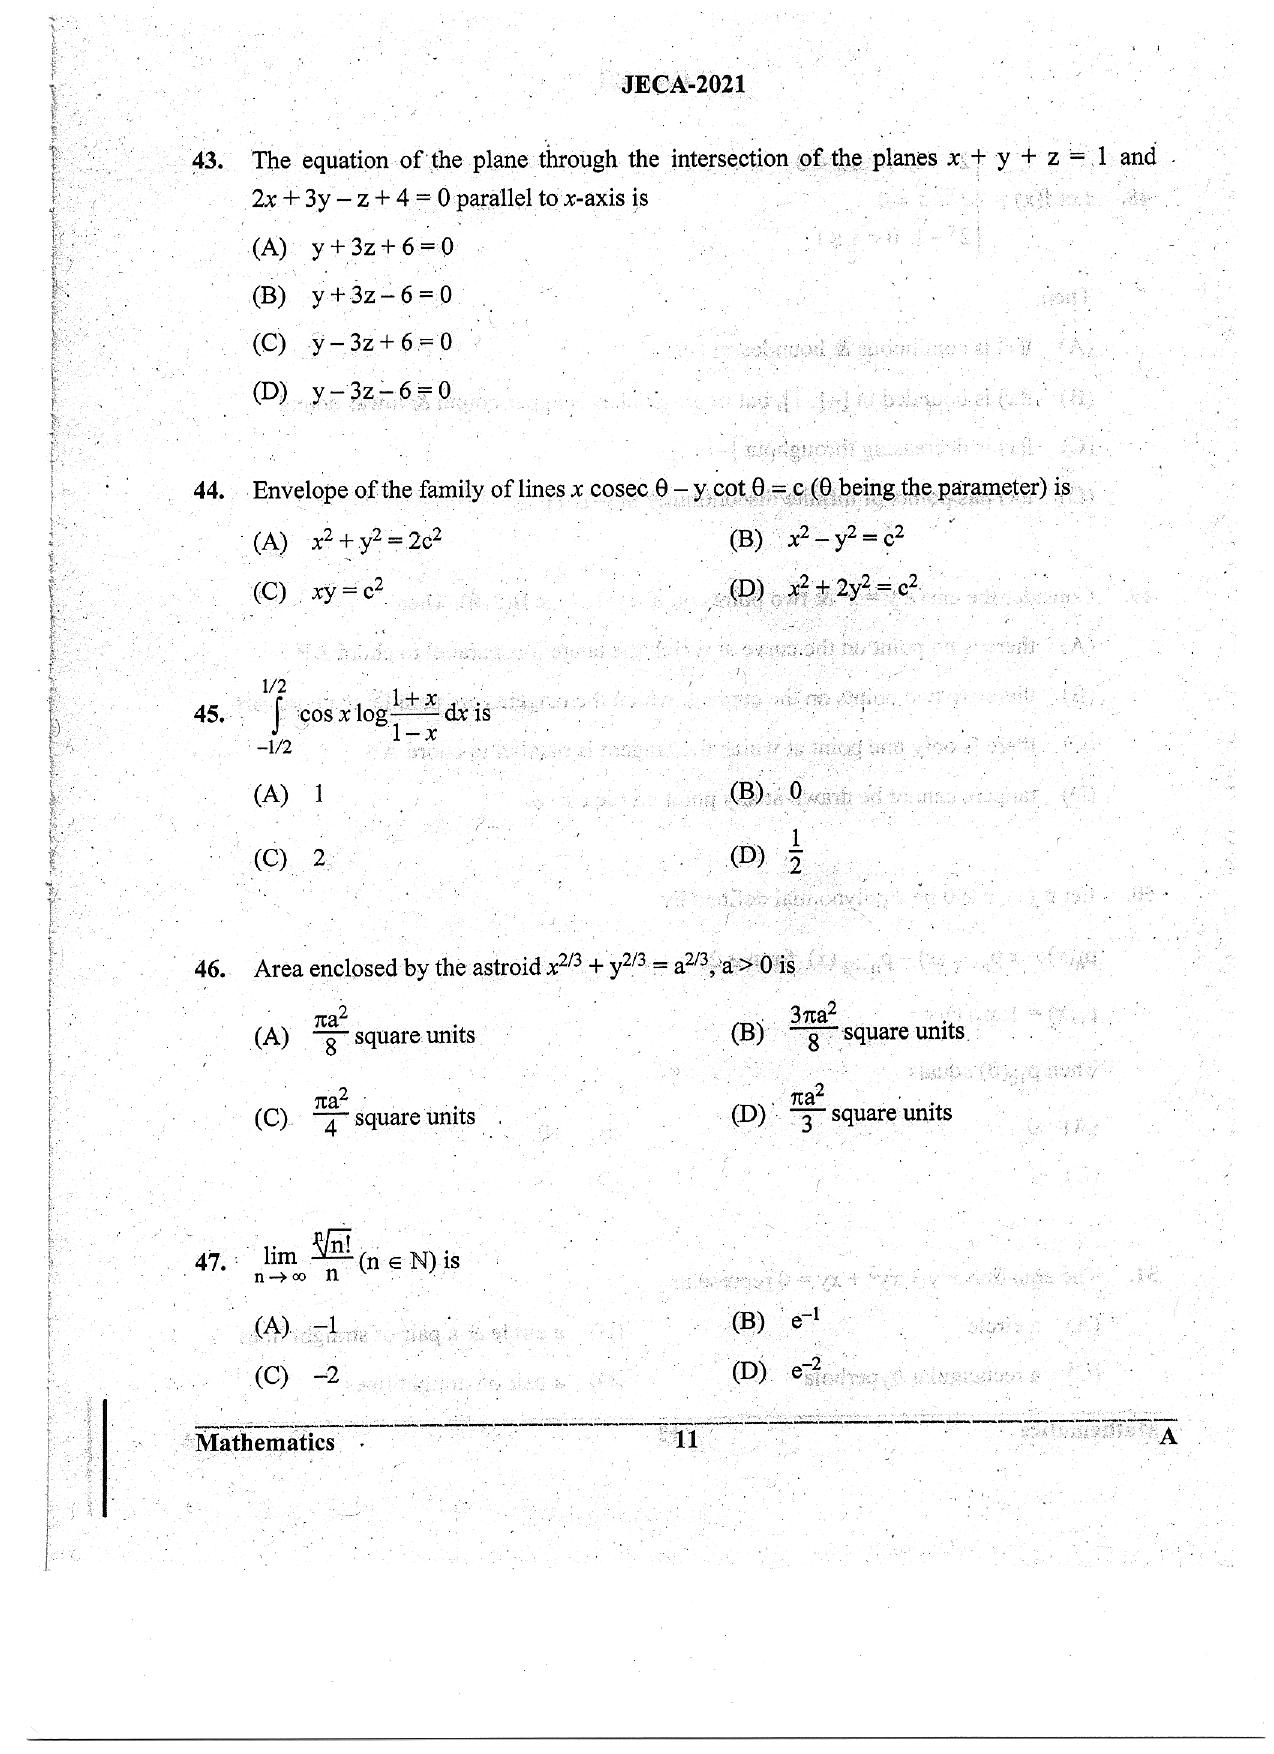 WB JECA 2021 Mathematics Question Paper - Page 11